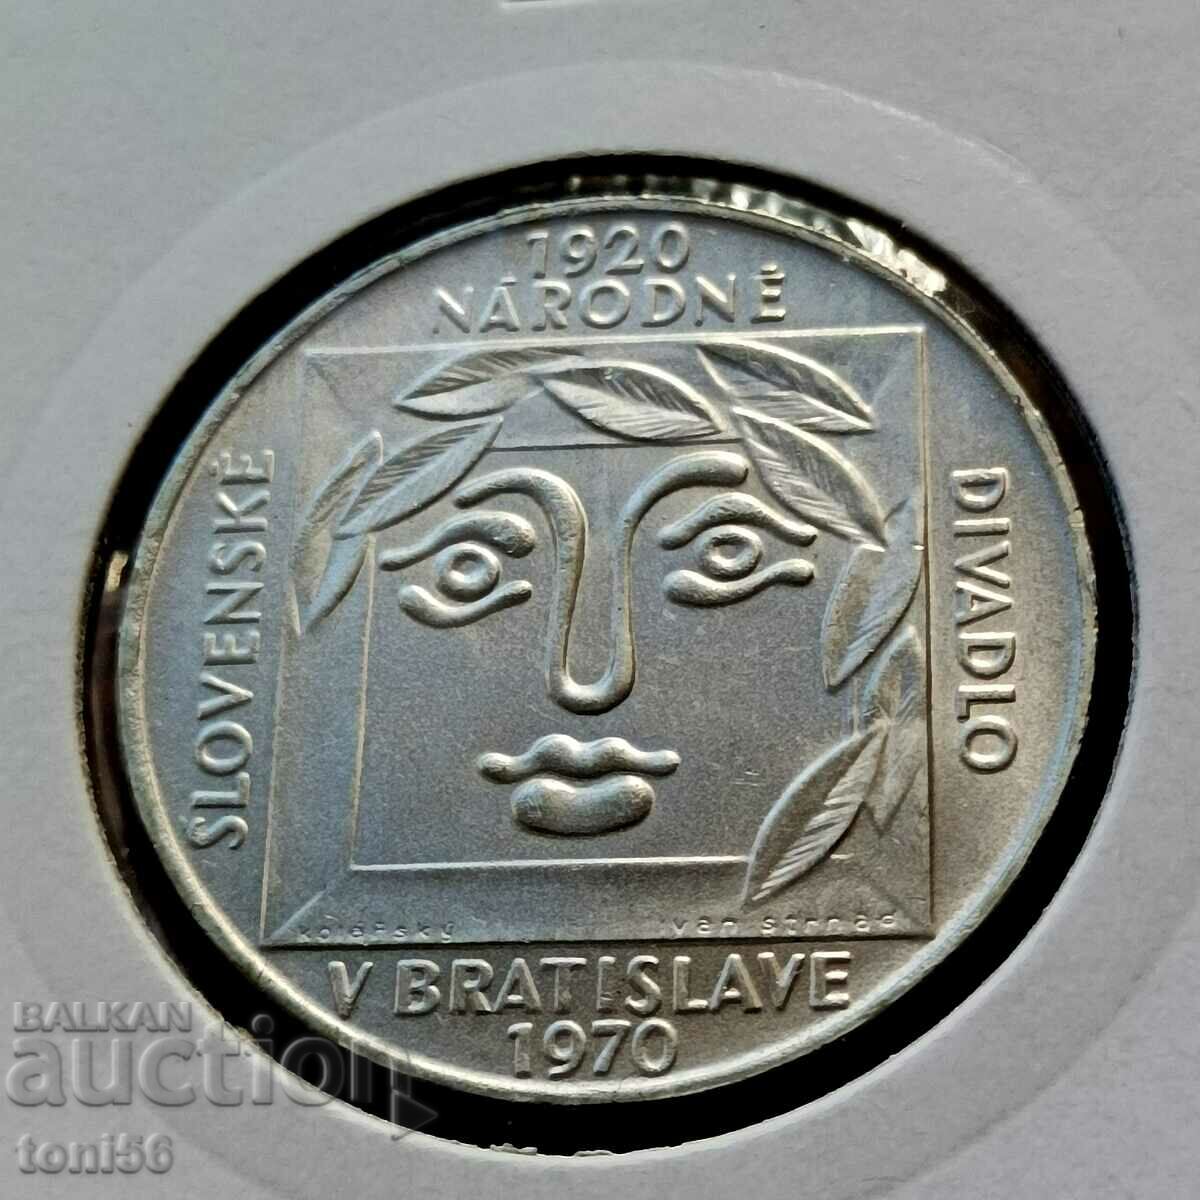 Cehoslovacia 25 coroane 1970 UNC - Argint